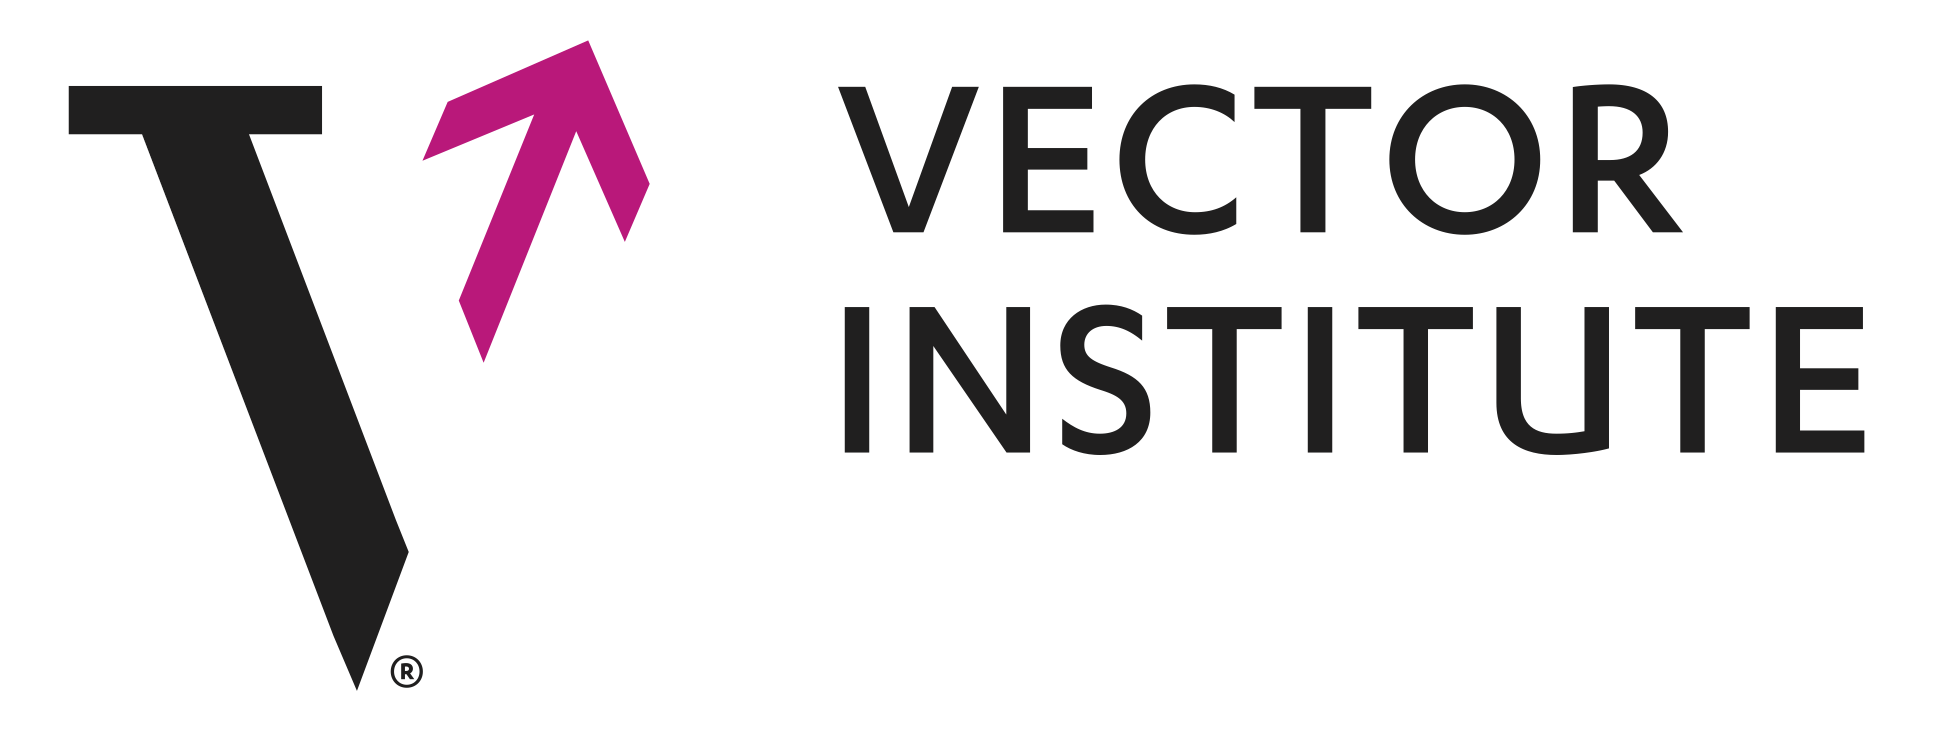 Vector Institute.png